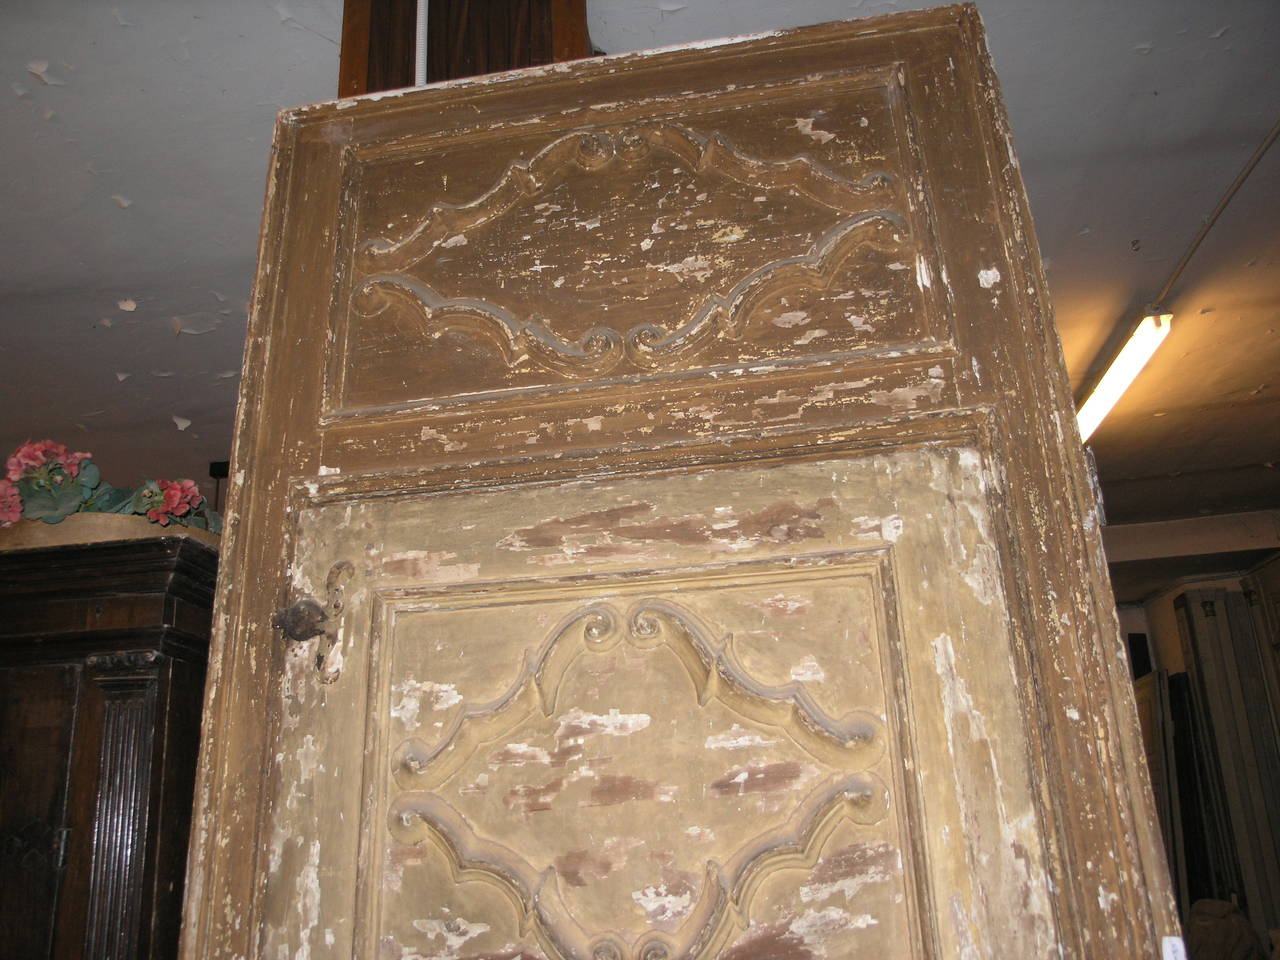 Antique lacquered door, made of Poplar.
Piemontese Barocco, Torino, IT.